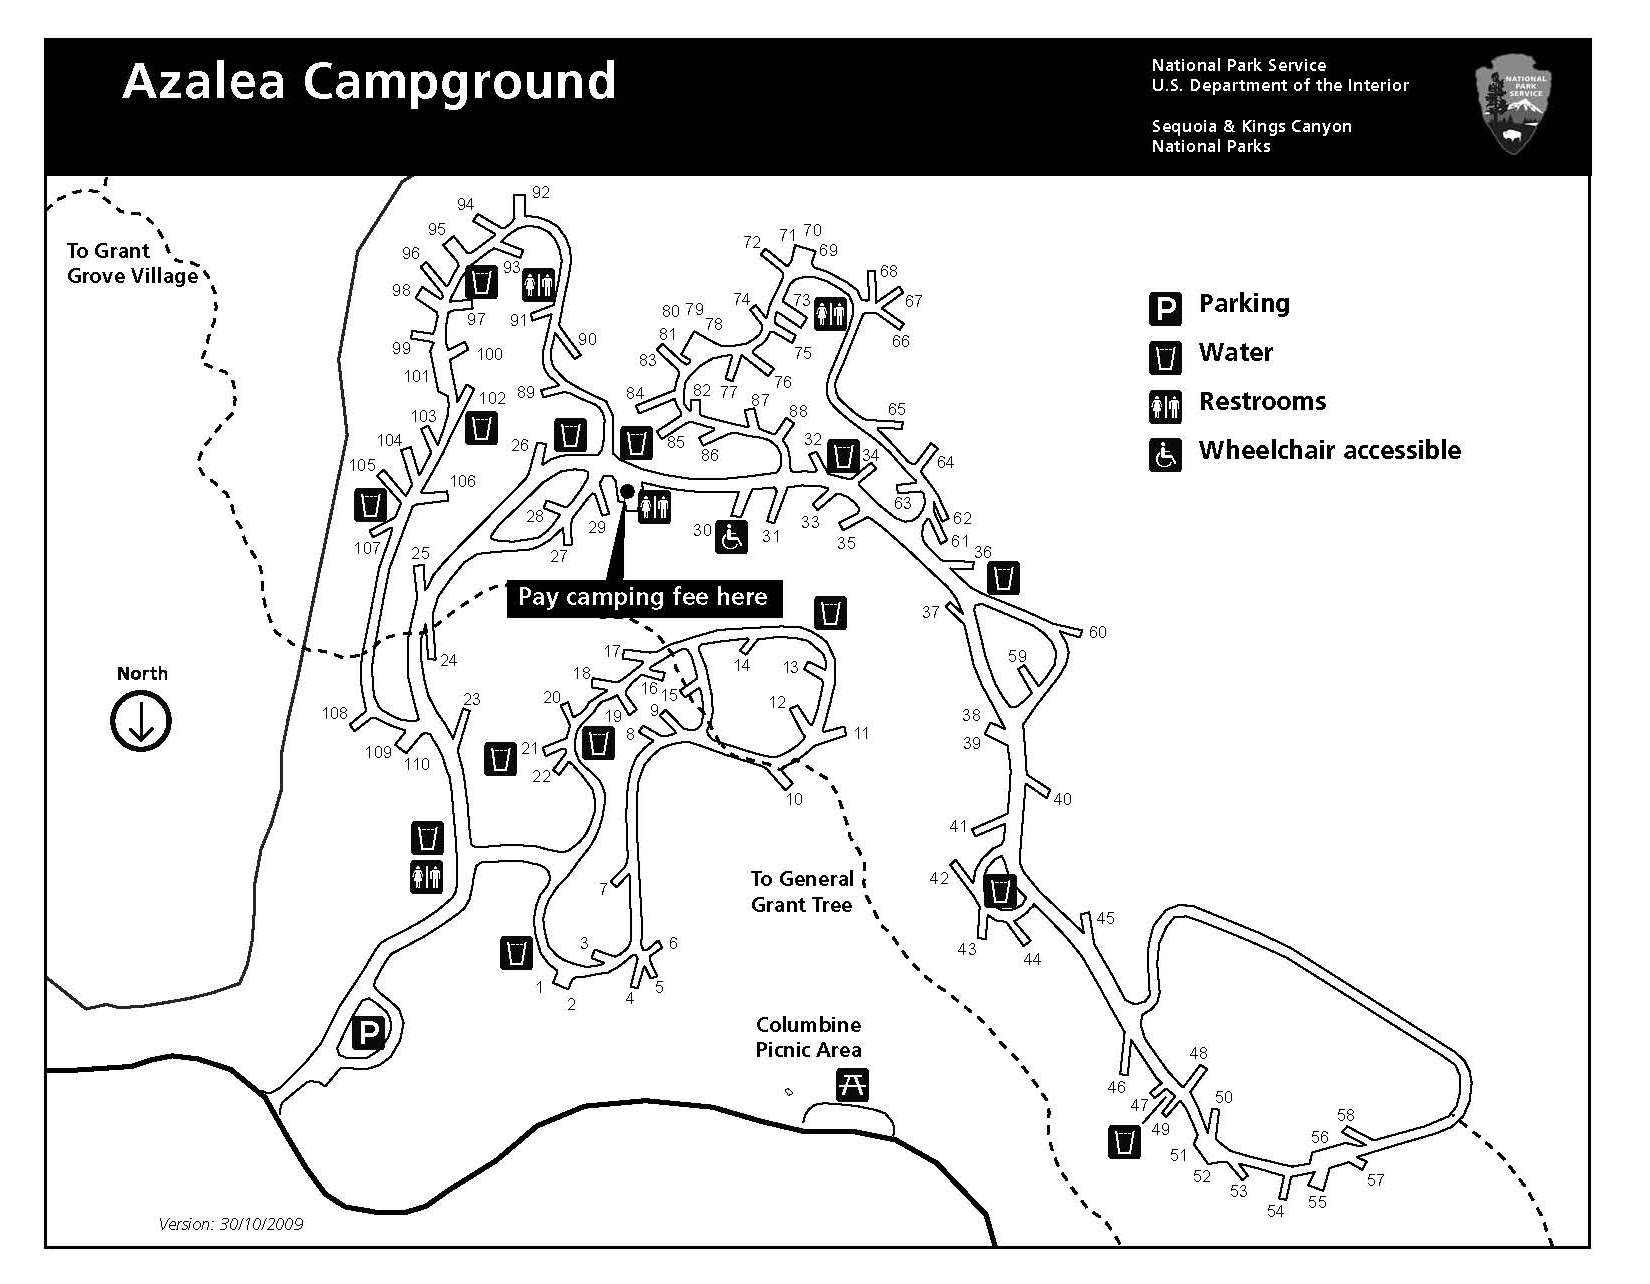 Azalea Campground - Sequoia & Kings Canyon National Parks (U.S